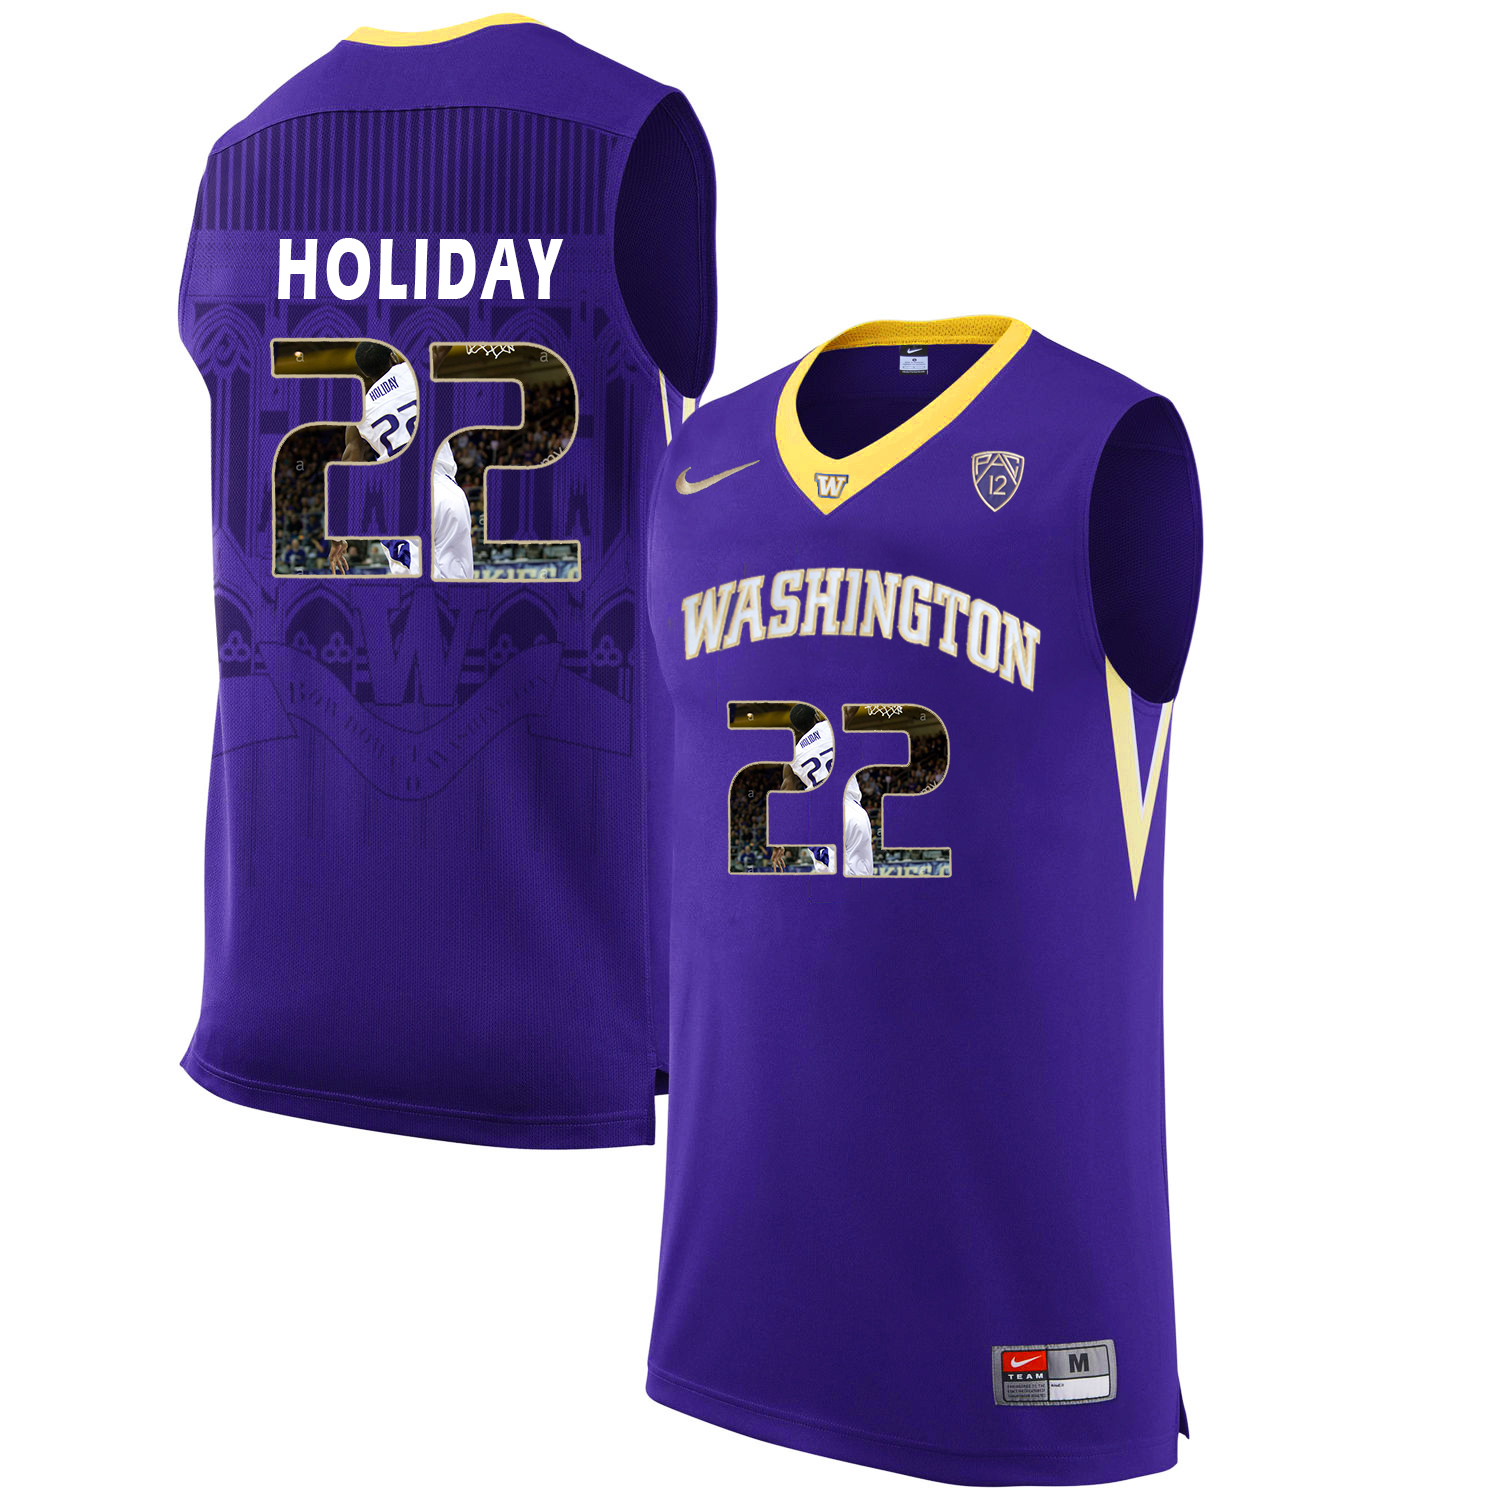 Washington Huskies 22 Justin Holiday Purple With Portait College Basketball Jersey - Click Image to Close